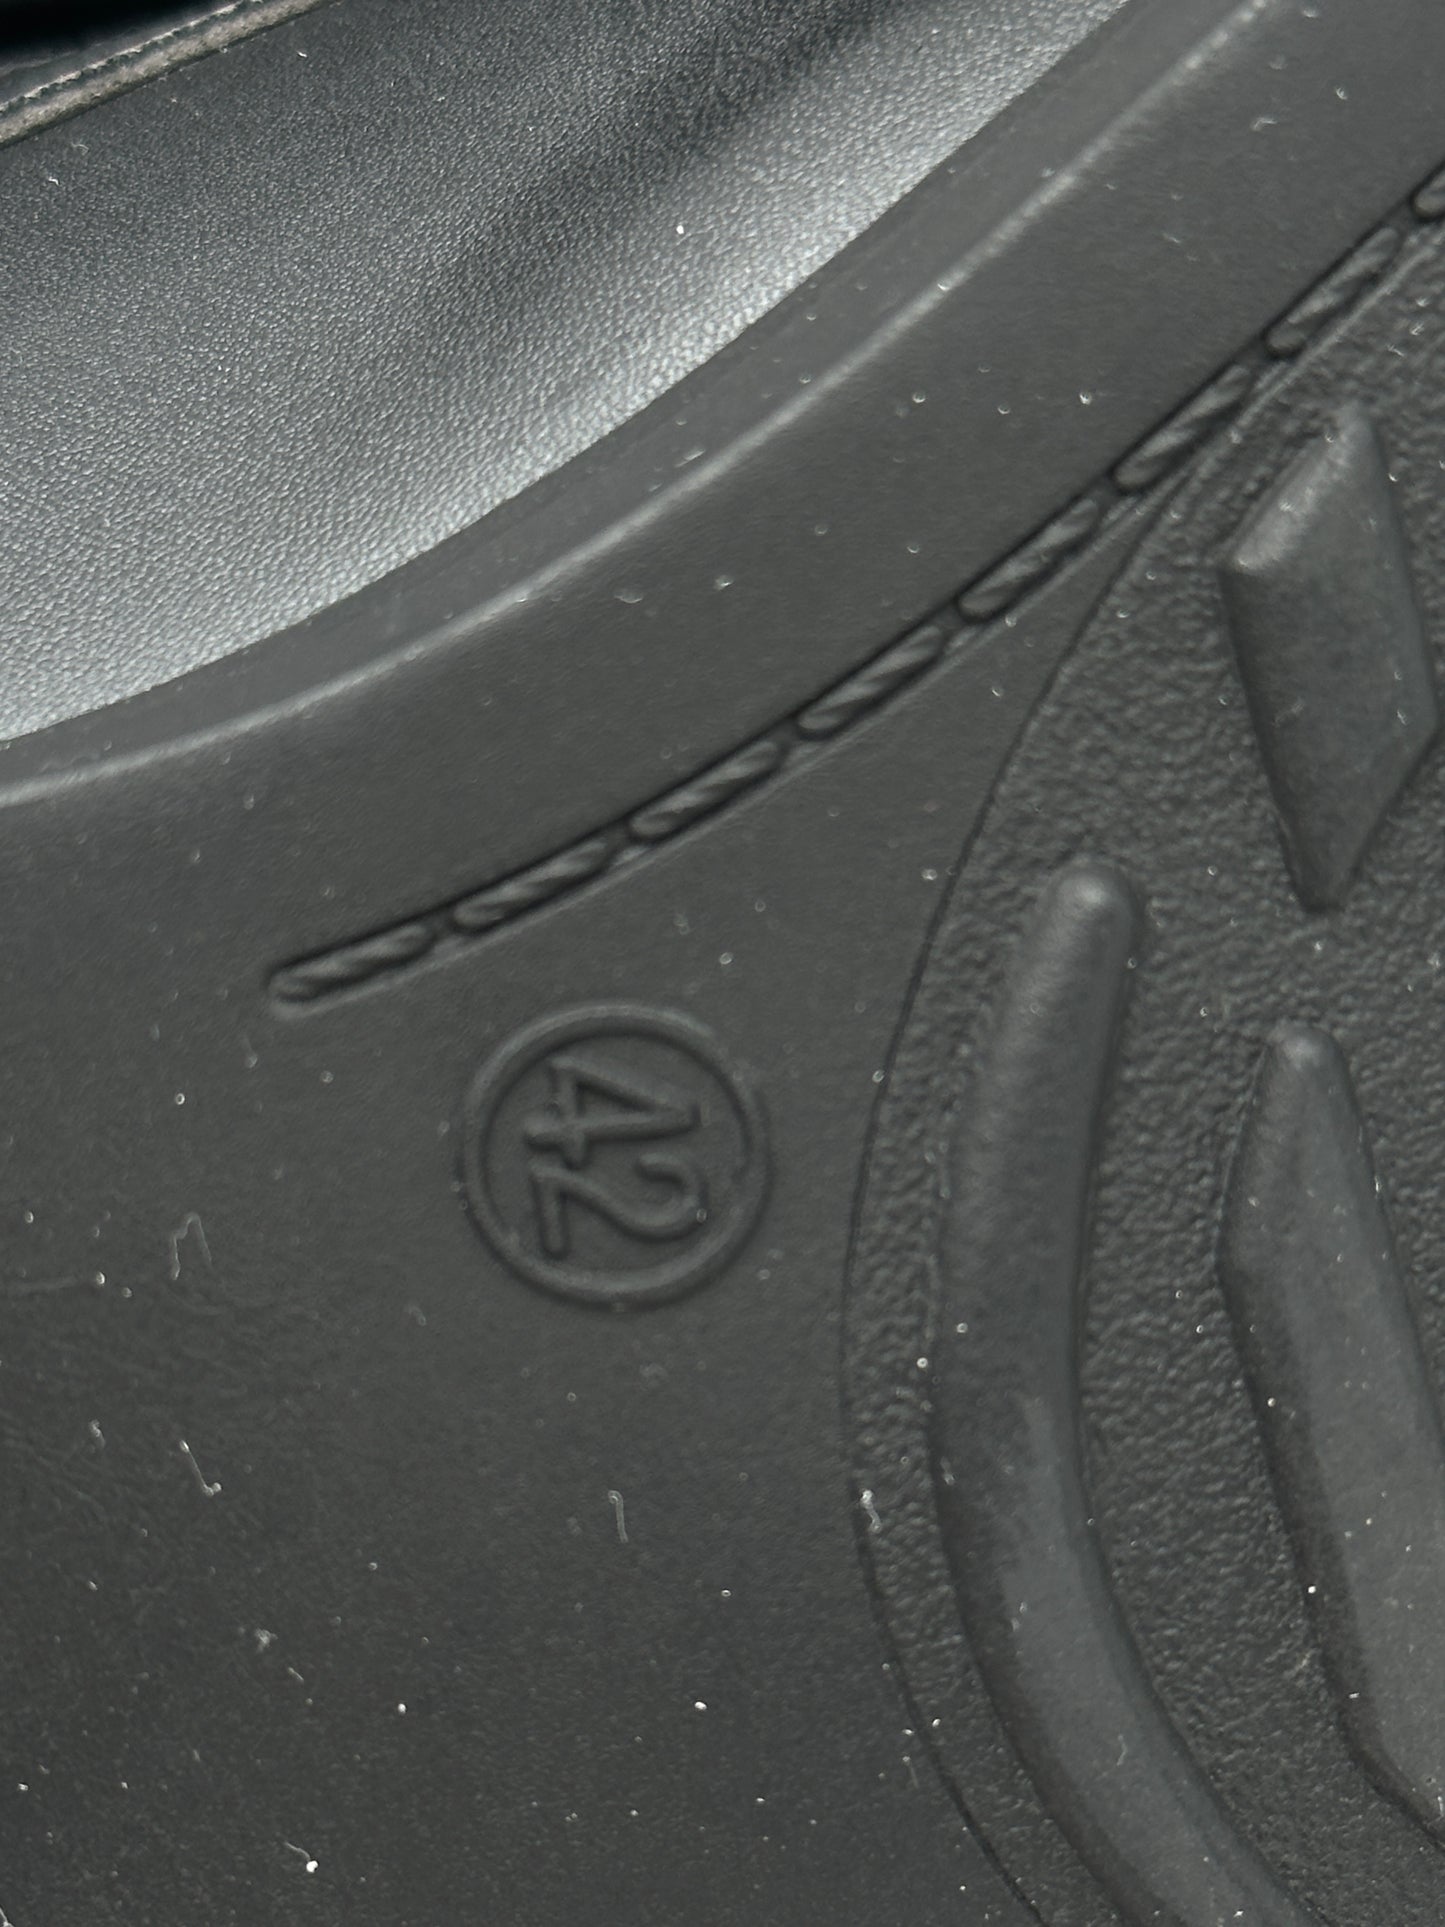 Mr. Hansen Men's Size 42 (US 8.5) Vegan Leather Black Dress Shoes